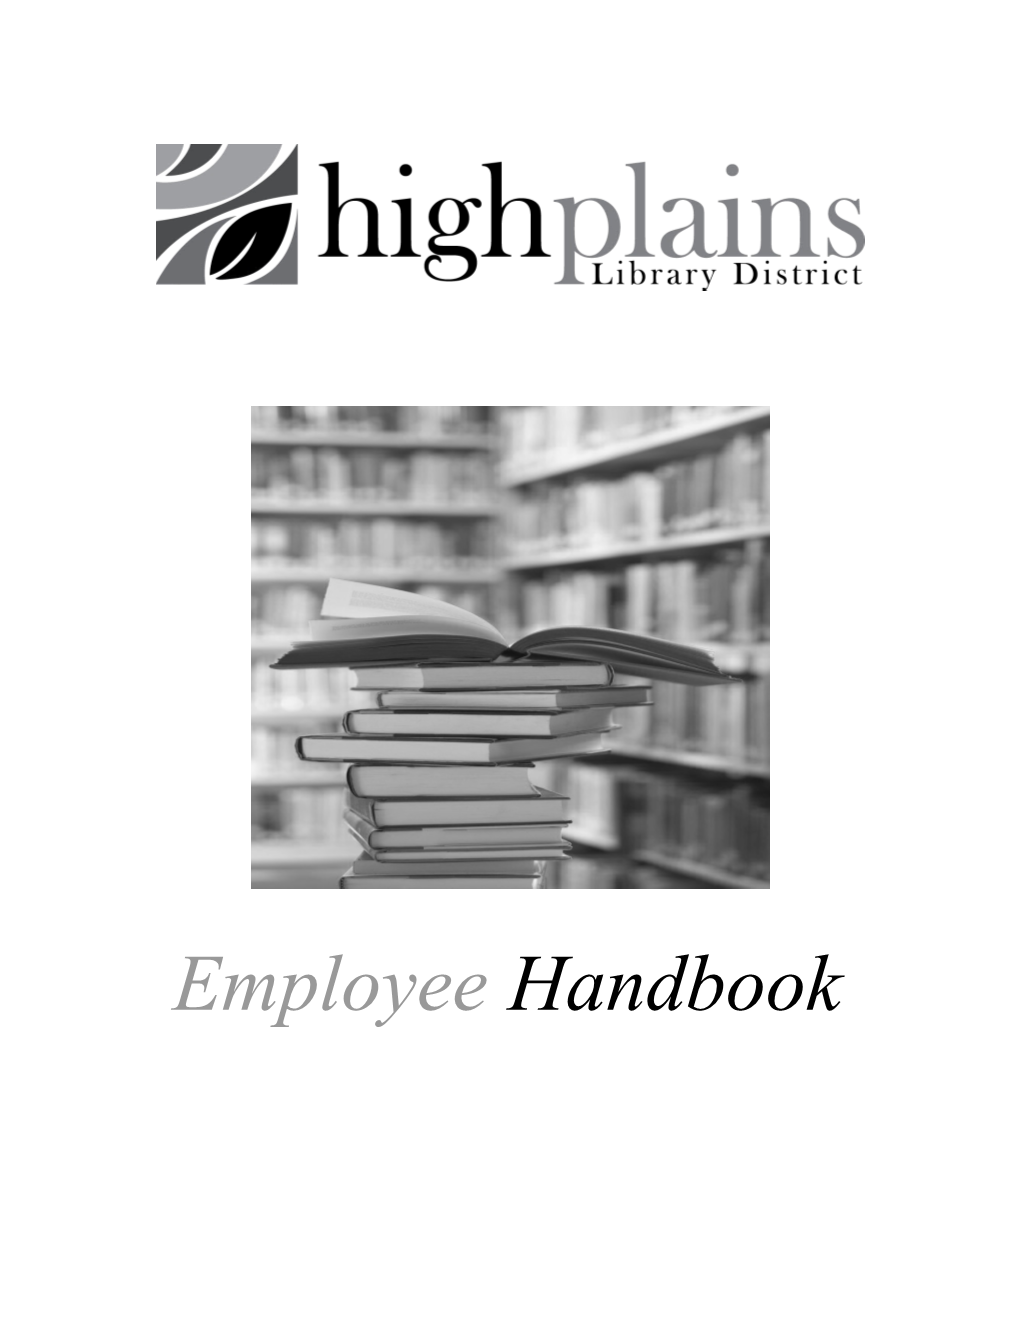 About the Employee Handbook 1